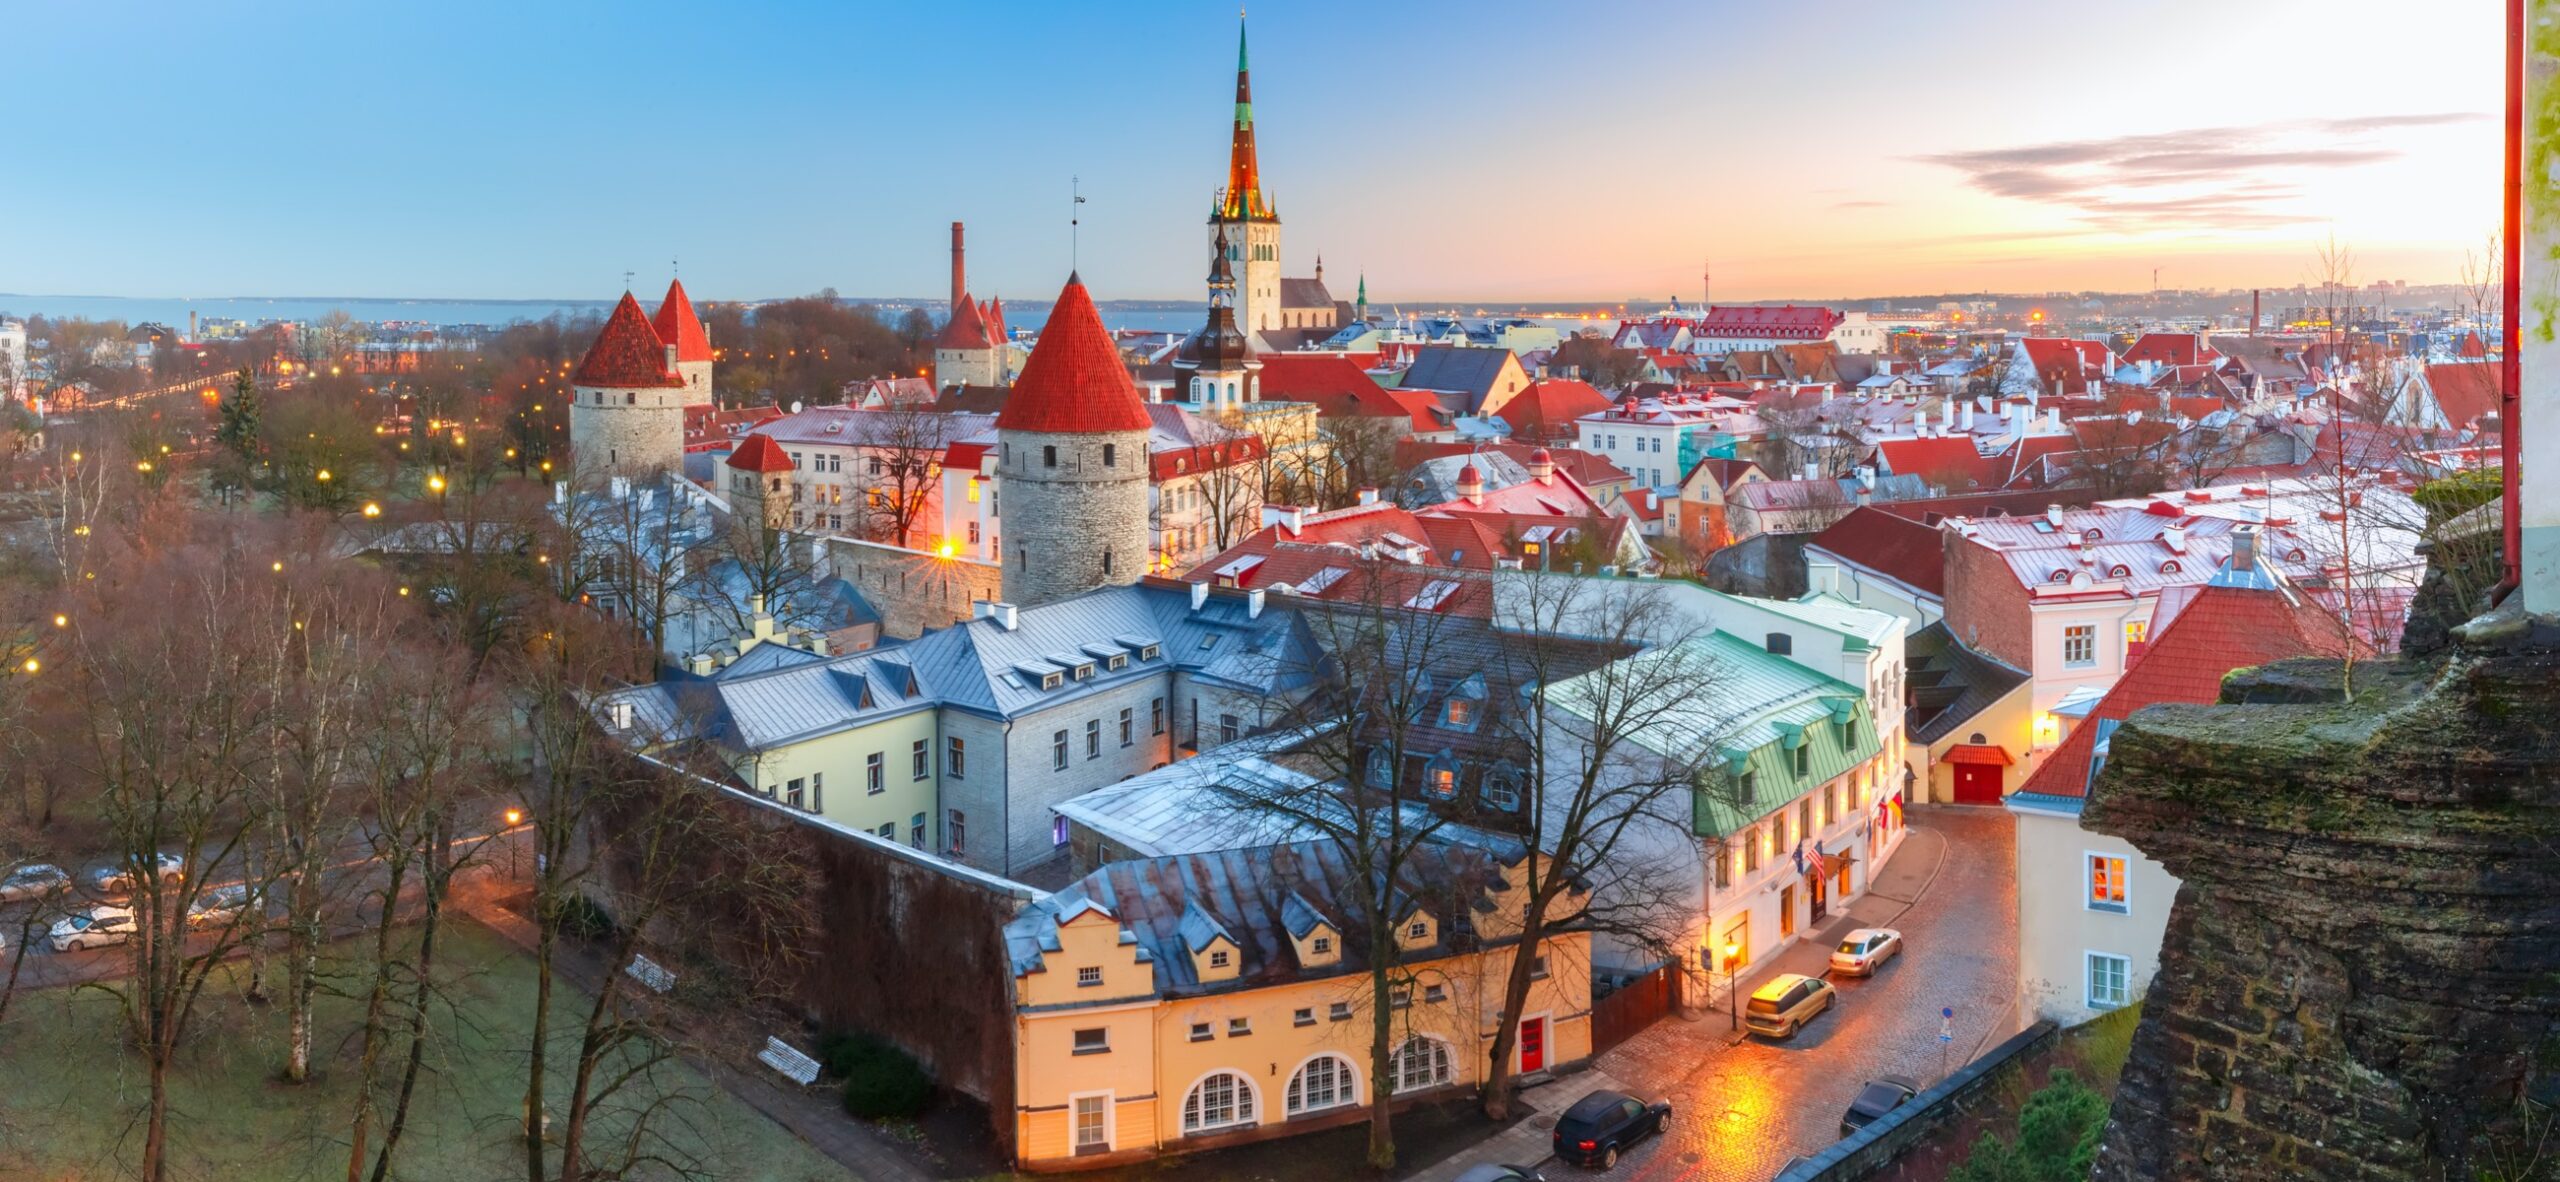 Into Tallinn: Enjoying the Best of Estonia’s Capital City